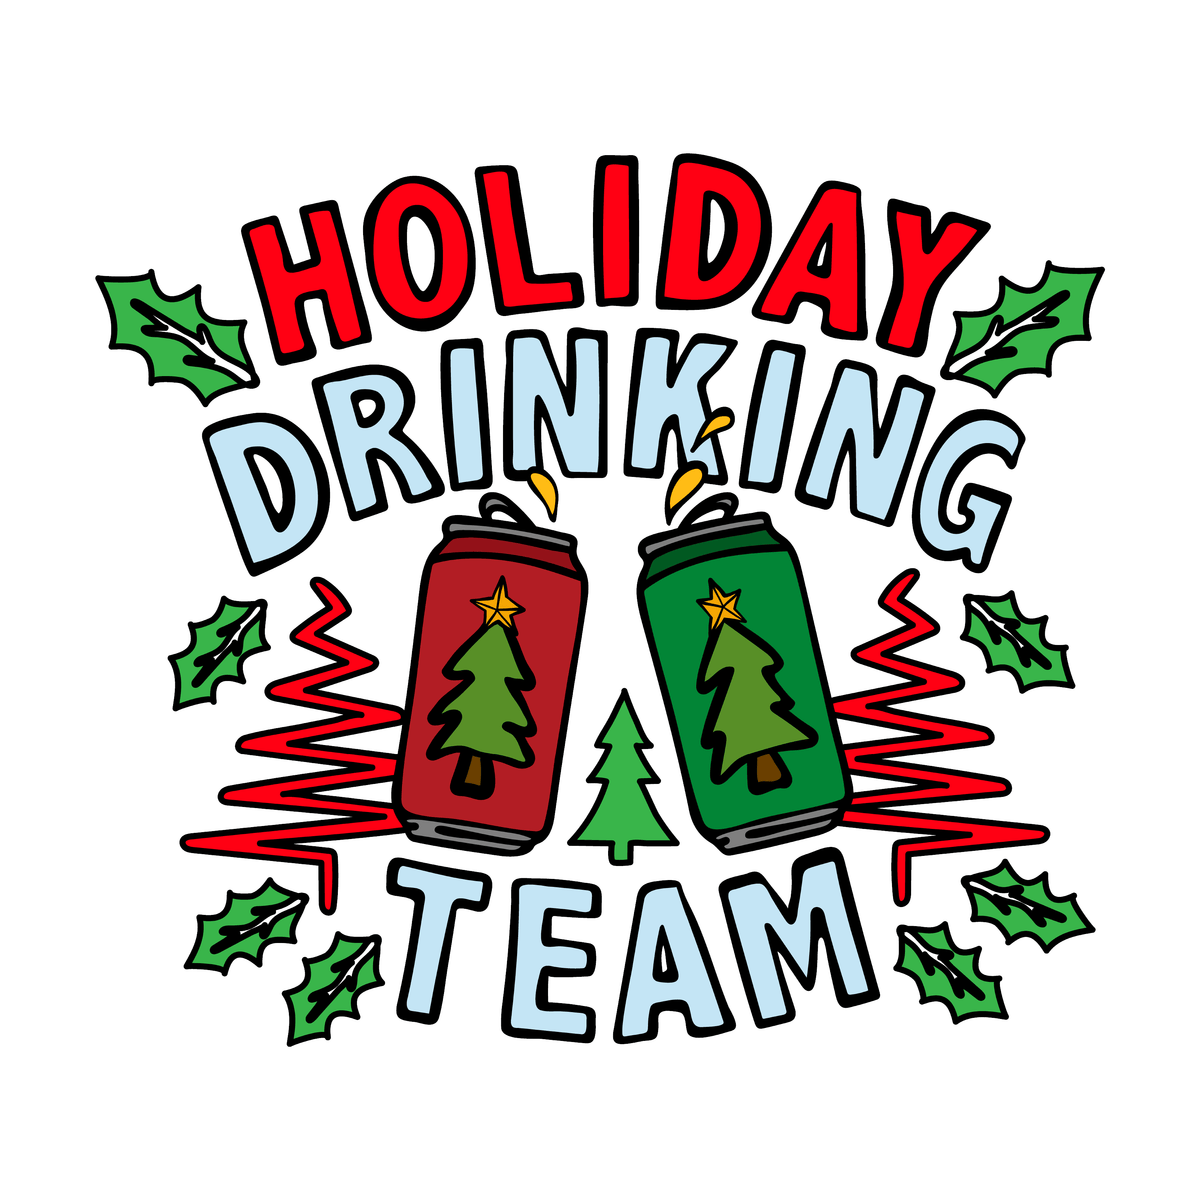 Holiday Drinking Team 🍻🎄 – Women's T Shirt